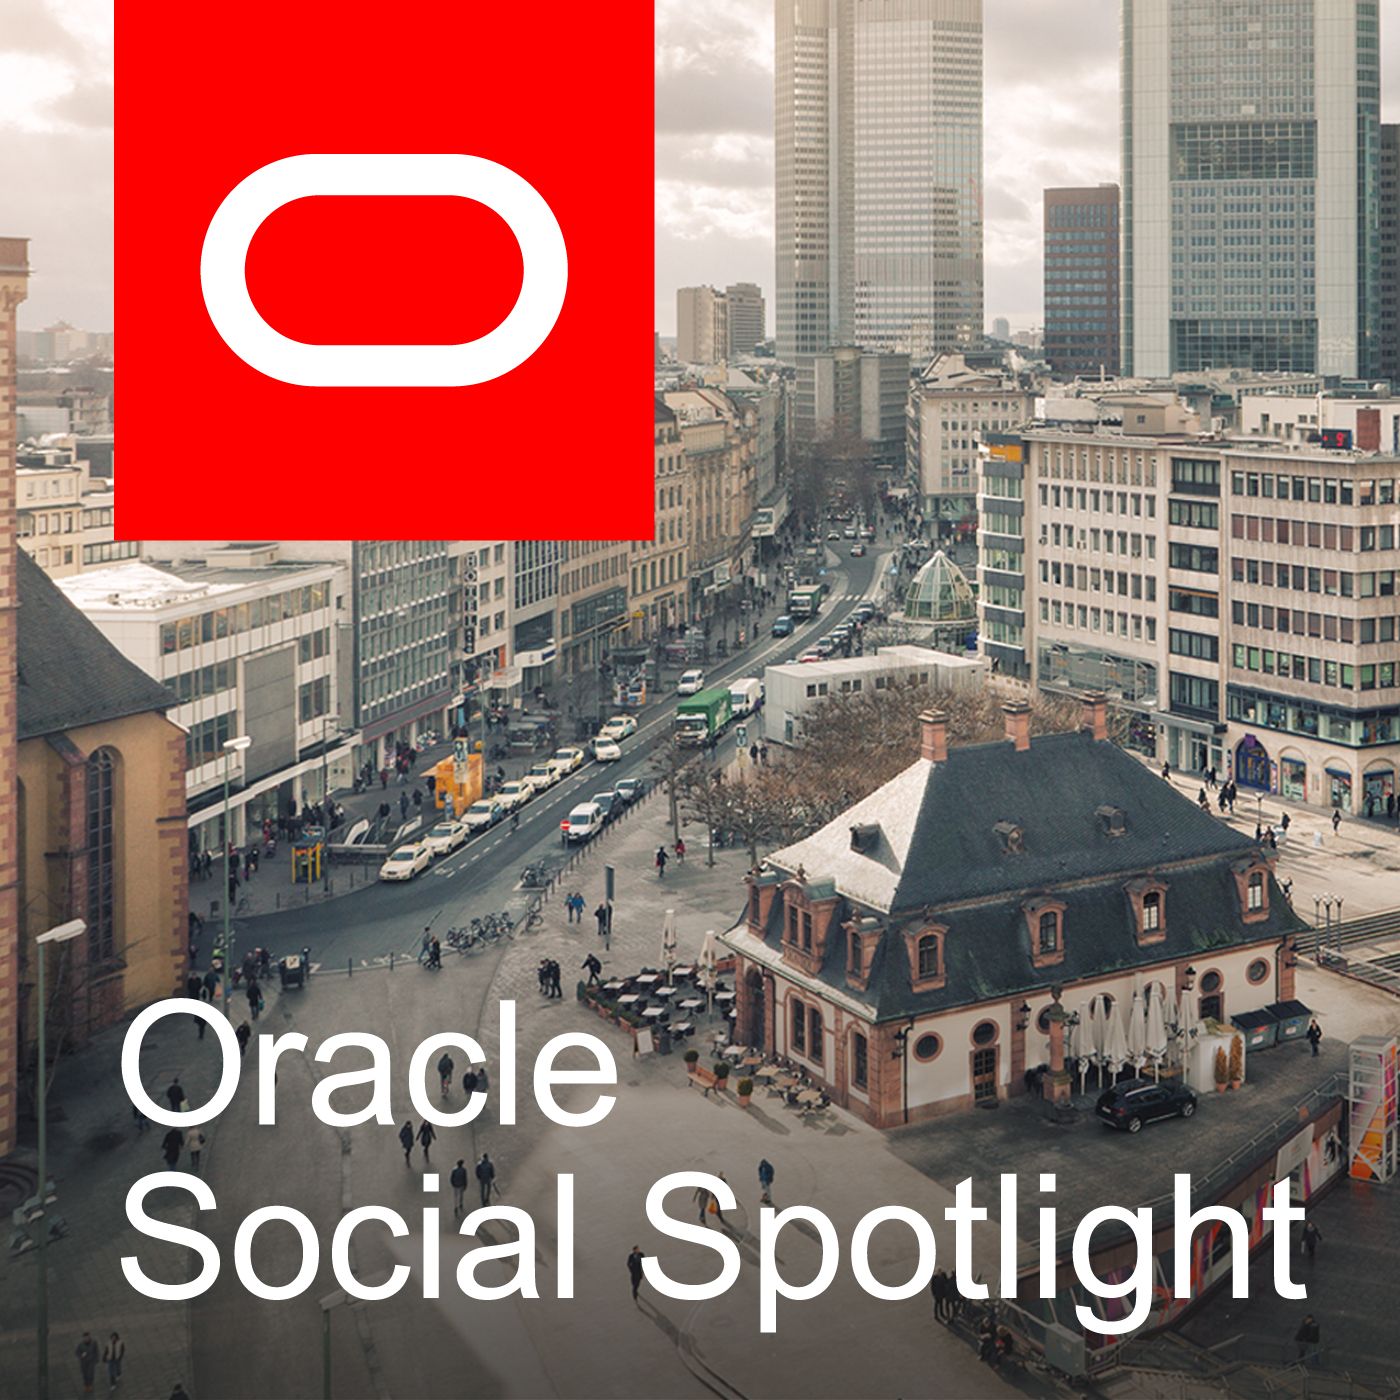 Oracle Social Spotlight 061014